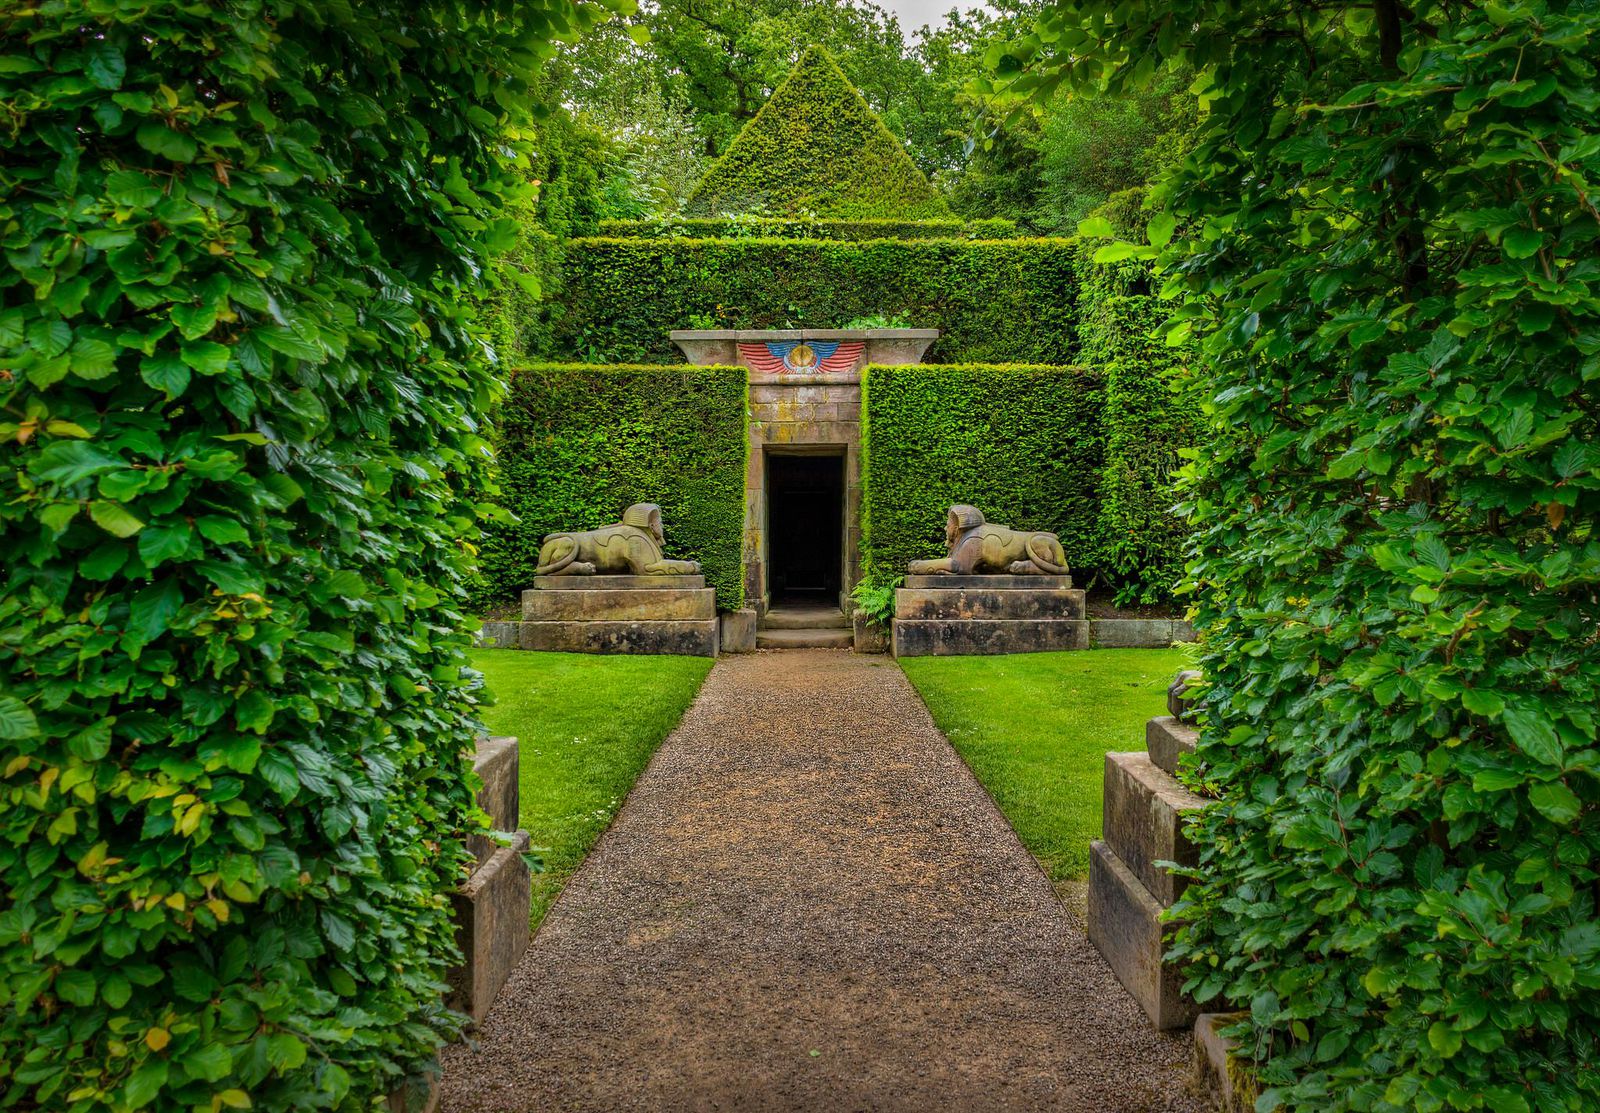 The Most Romantic Garden